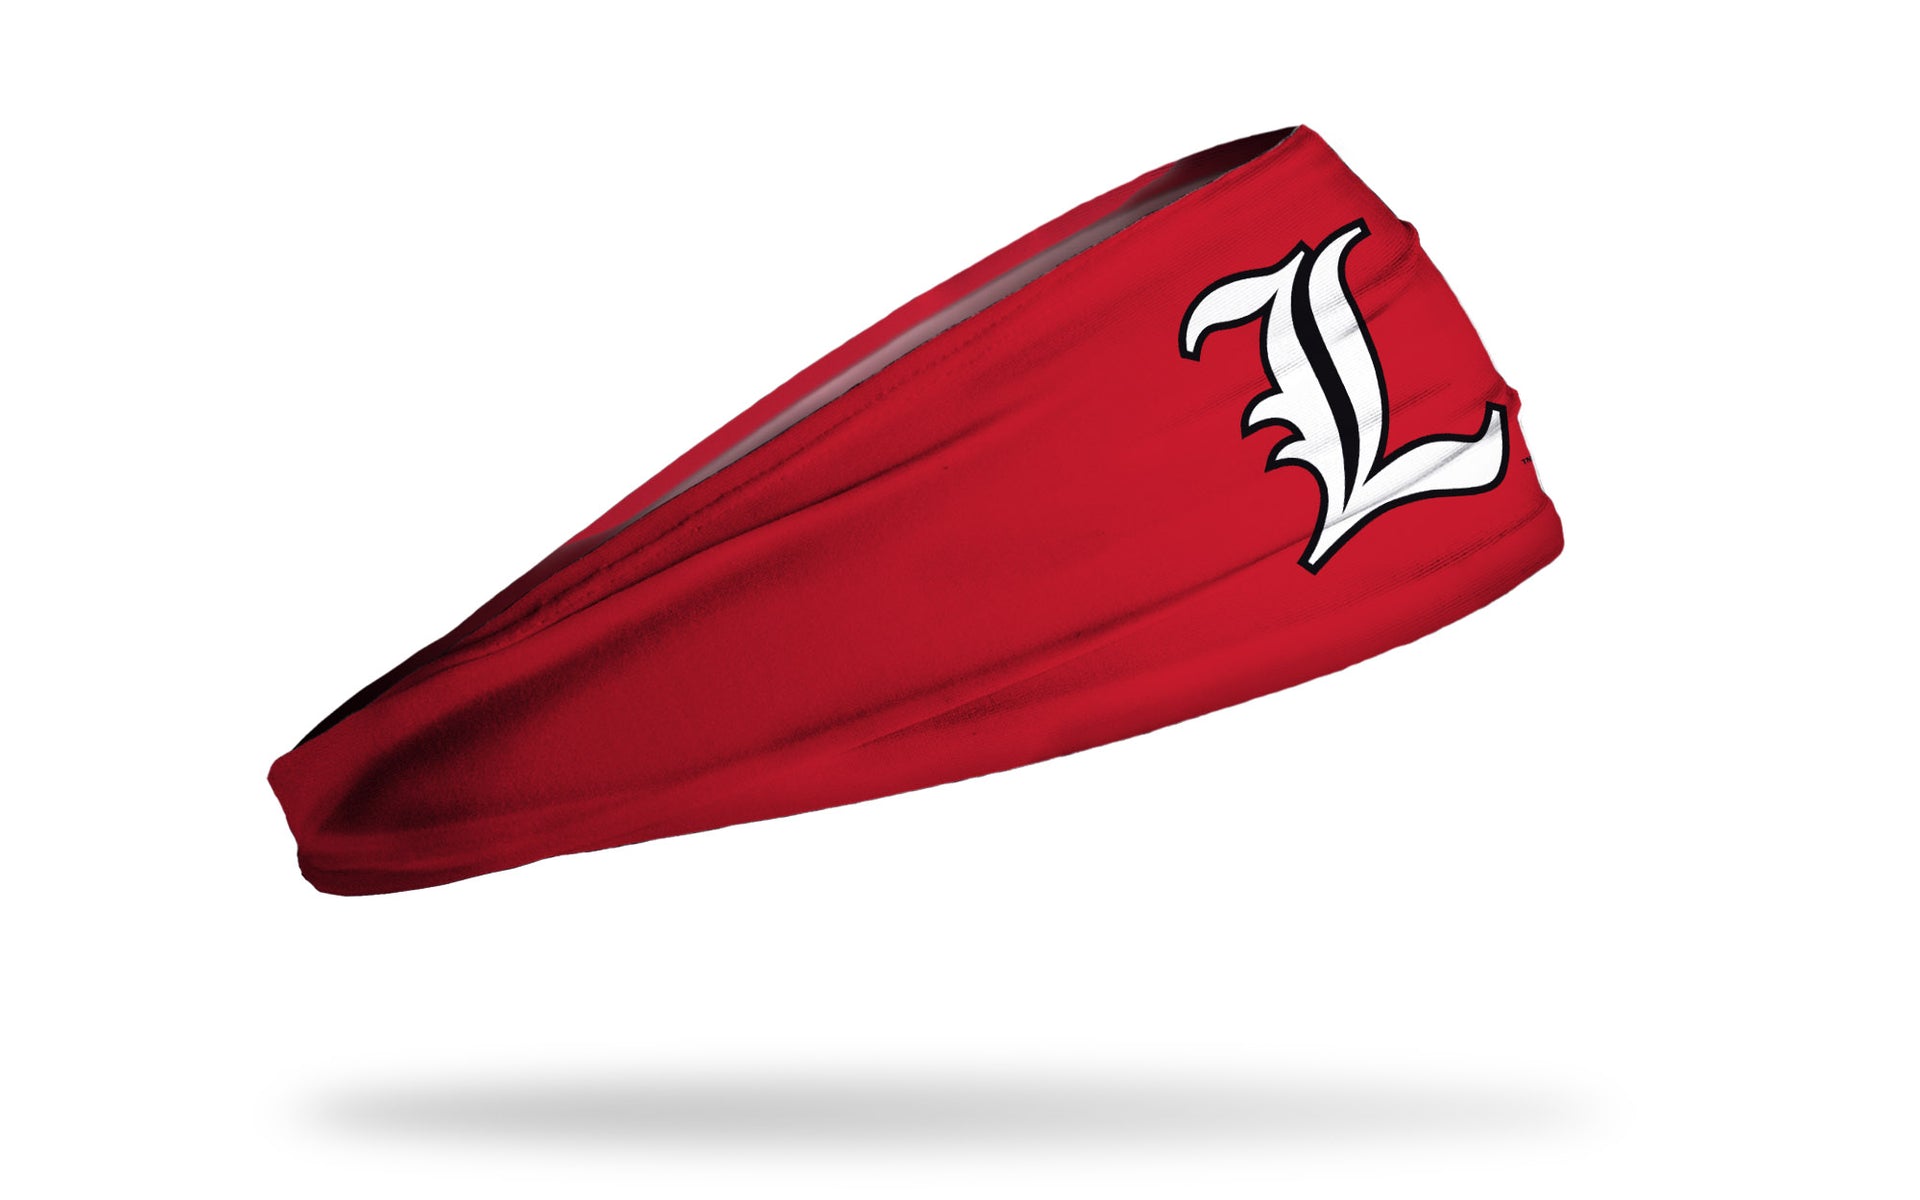 University of Louisville: Baseball Logo White Headband